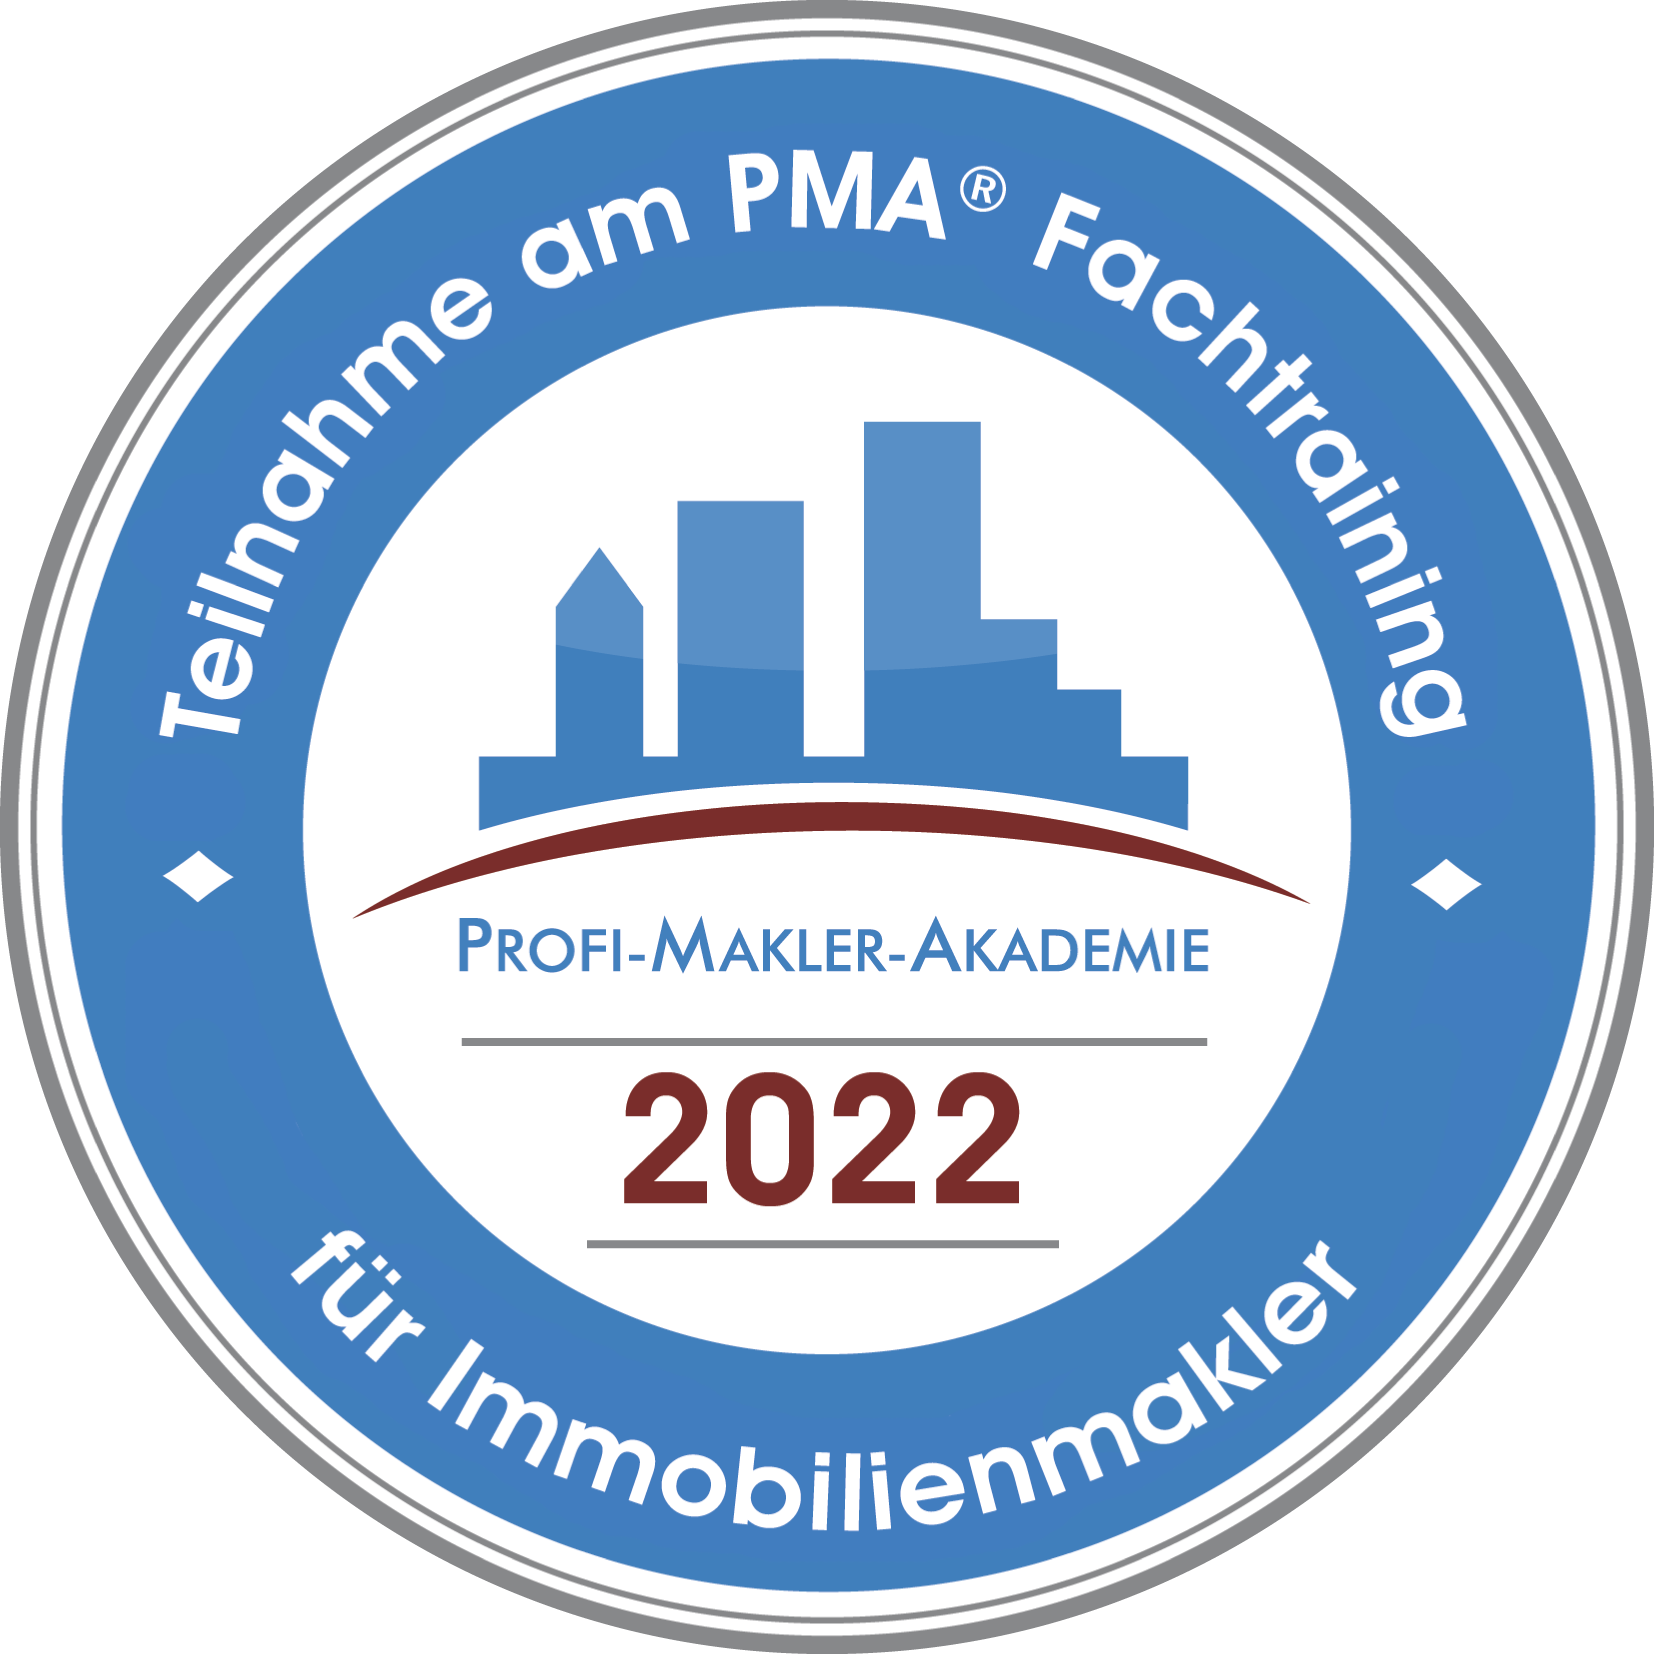 Emblem PMA Fachtraining 2022